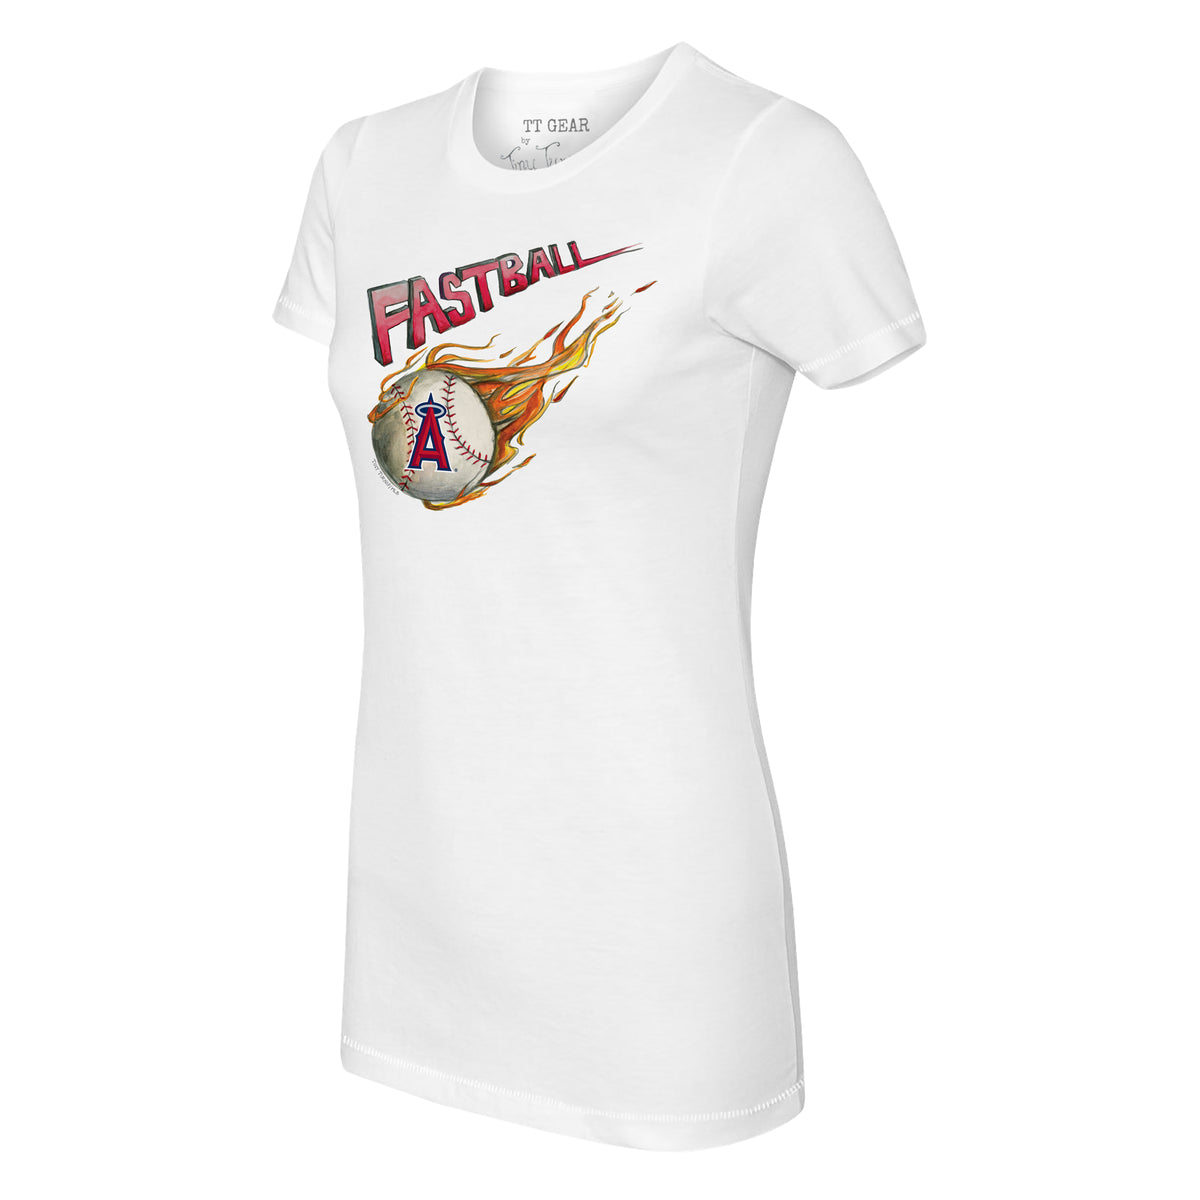 Los Angeles Angels Fastball Tee Shirt